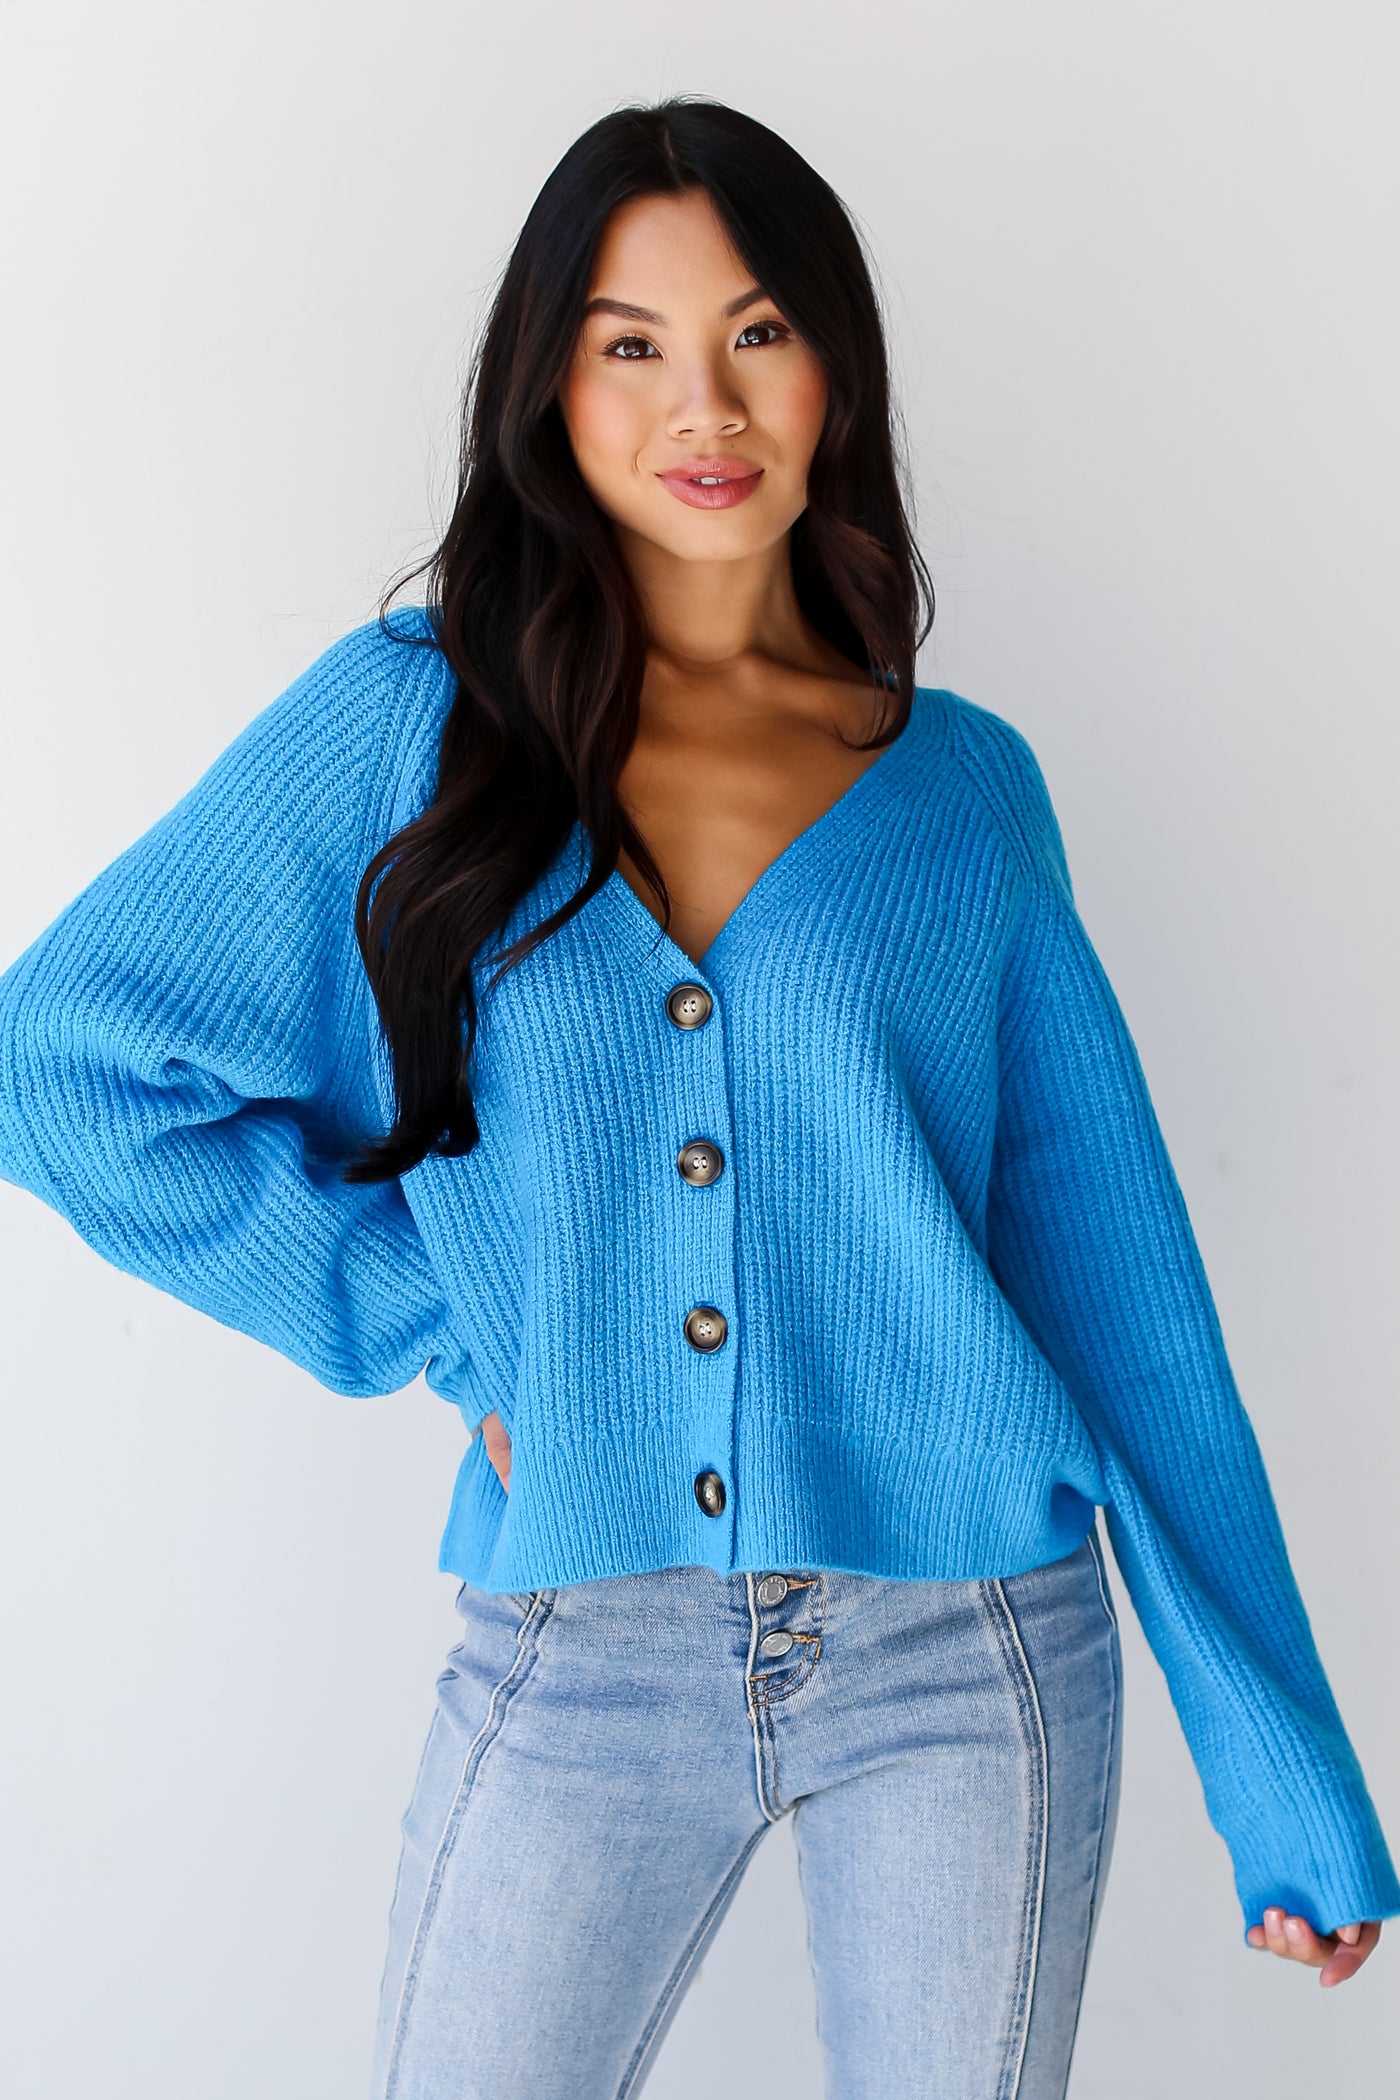 blue sweaters for women